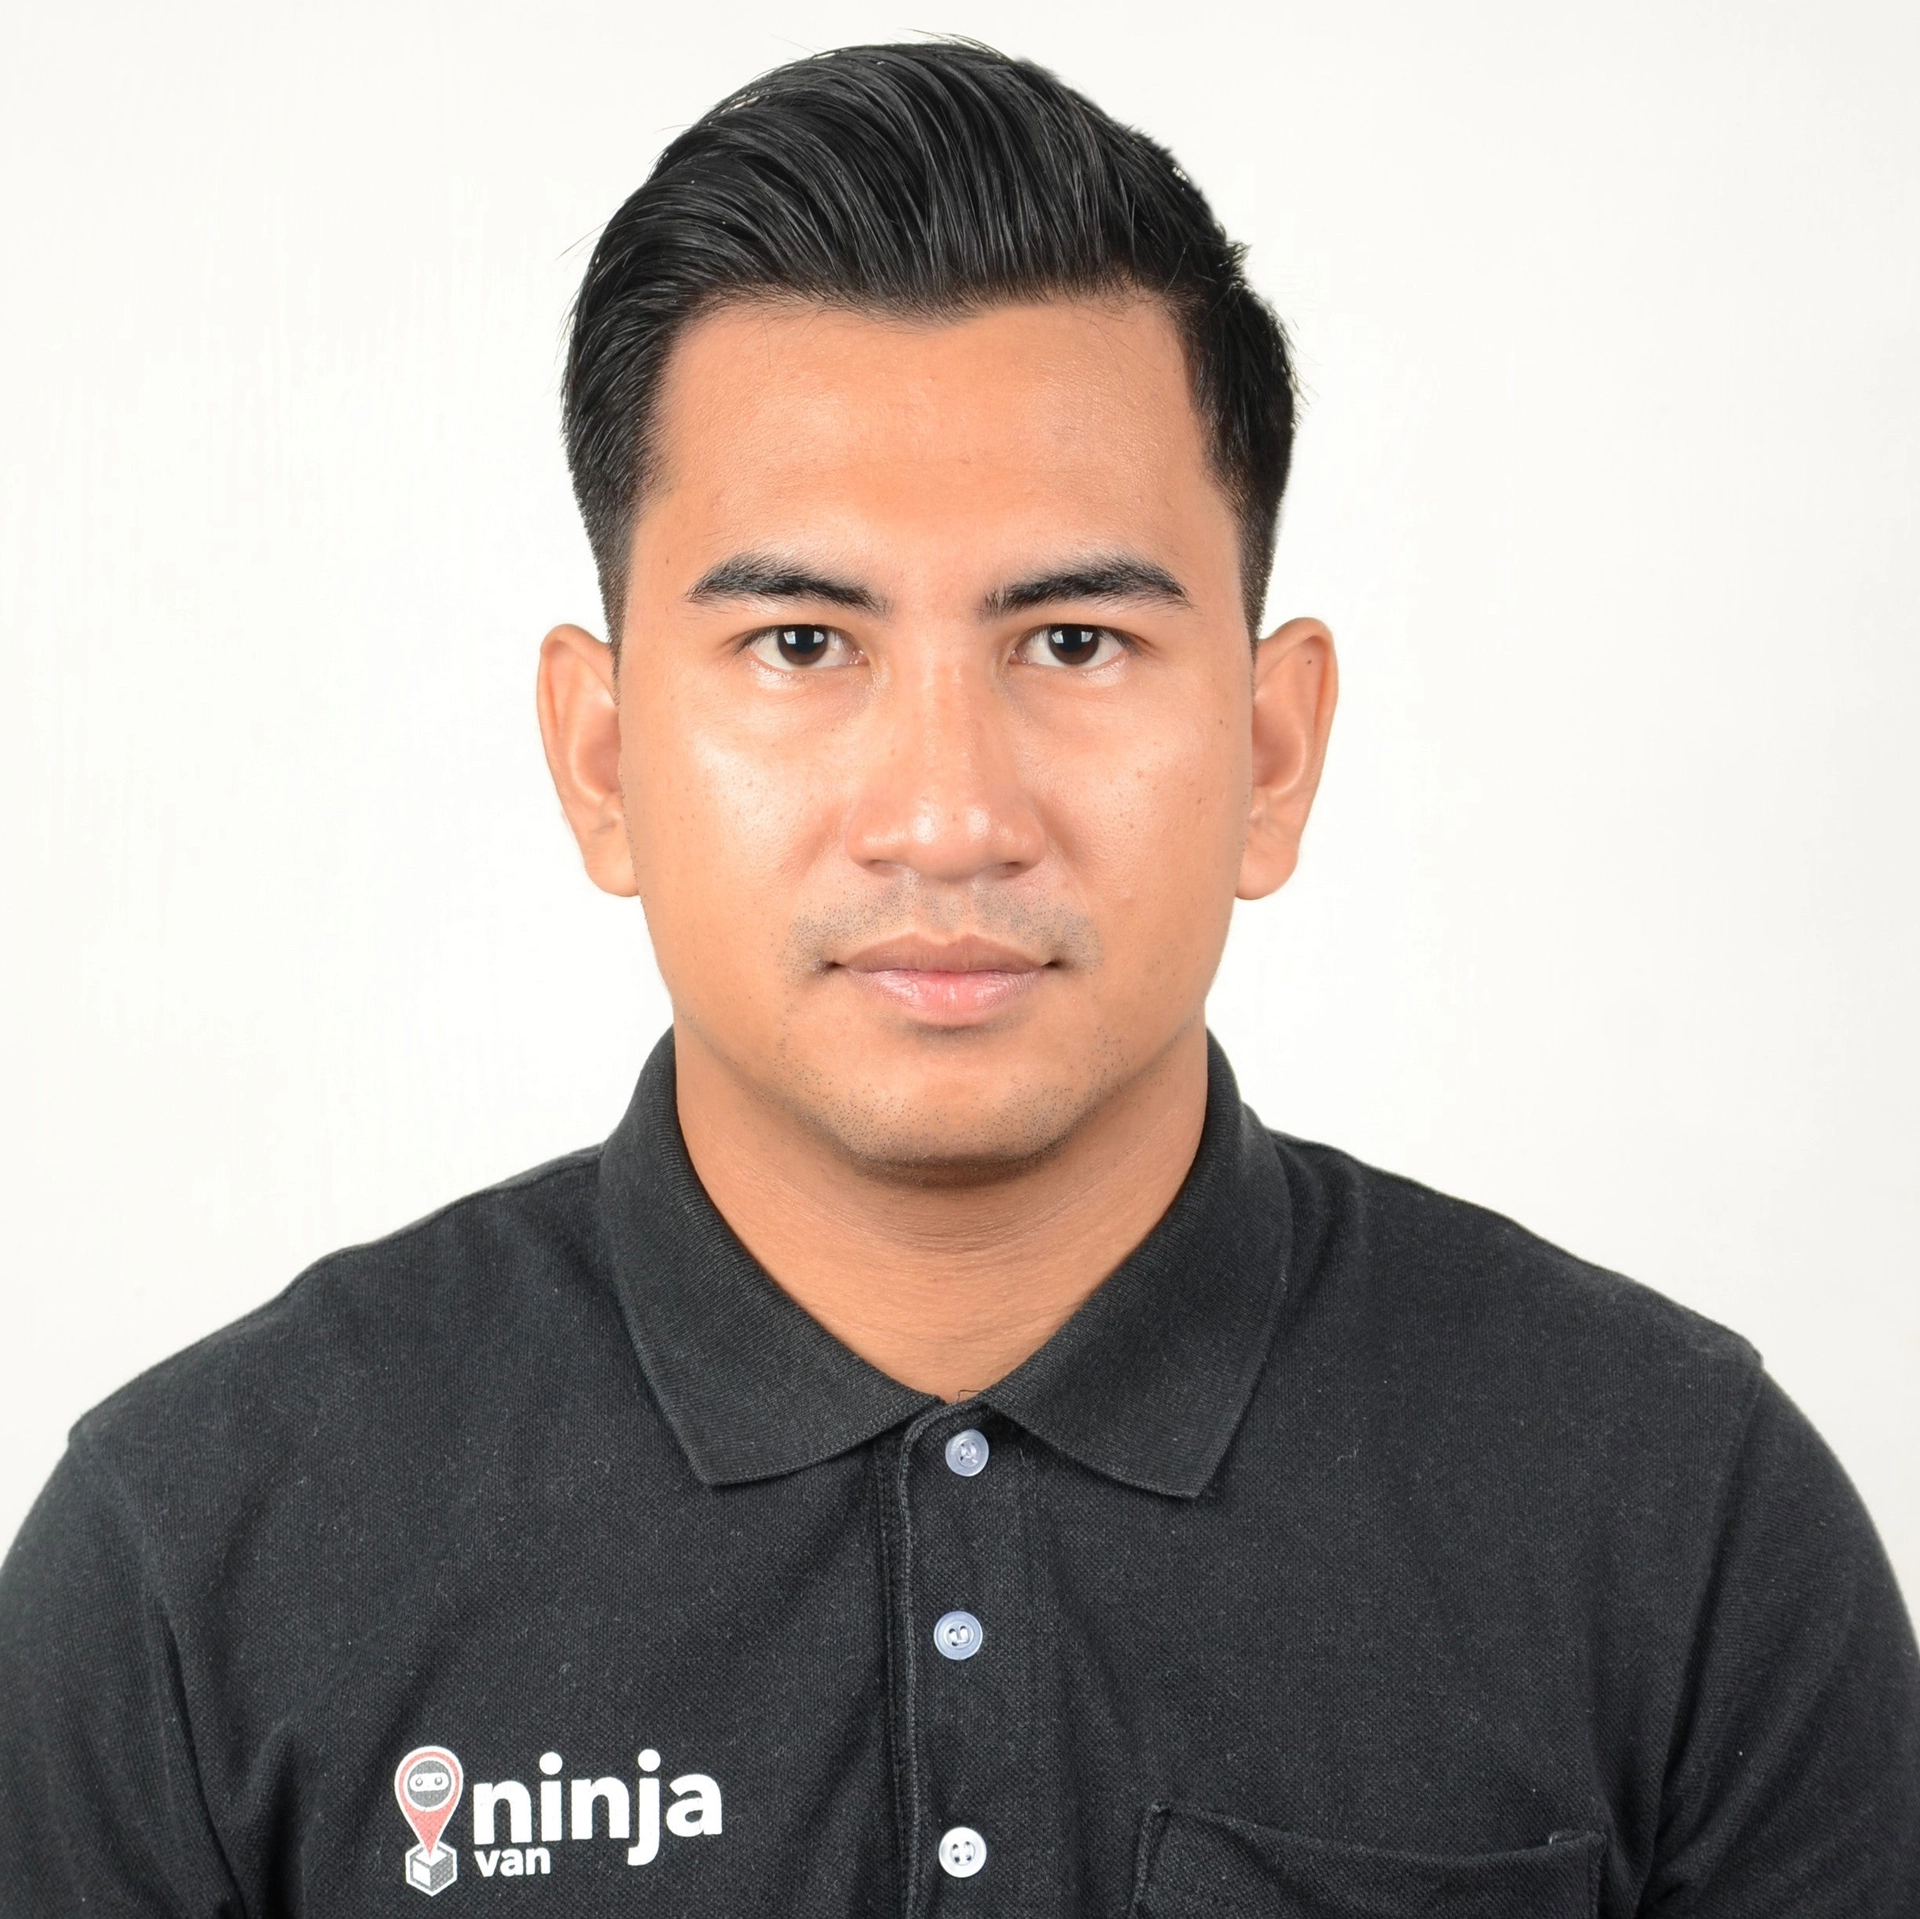 Ninja Van Malaysia fleet operations staff testimonial